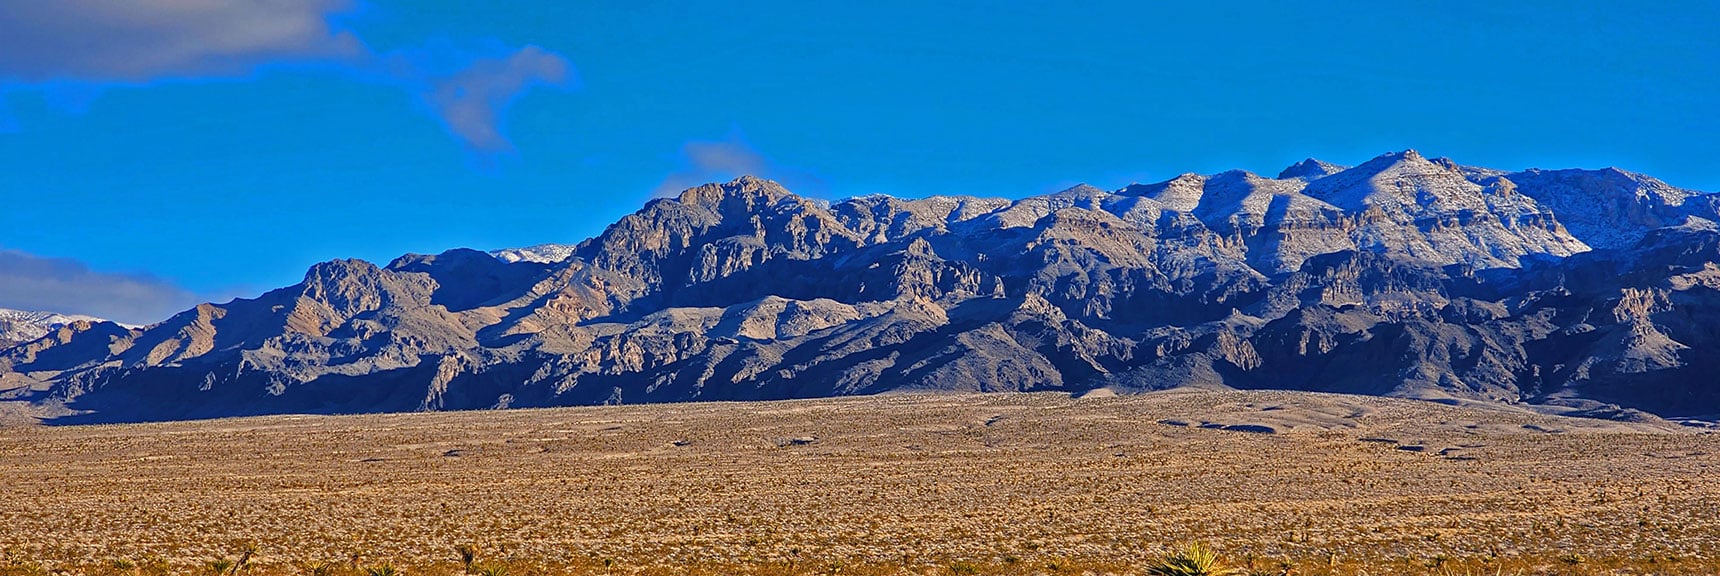 Northern Region of The Sheep Range | Fossil Ridge Far East | Desert National Wildlife Refuge, Nevada